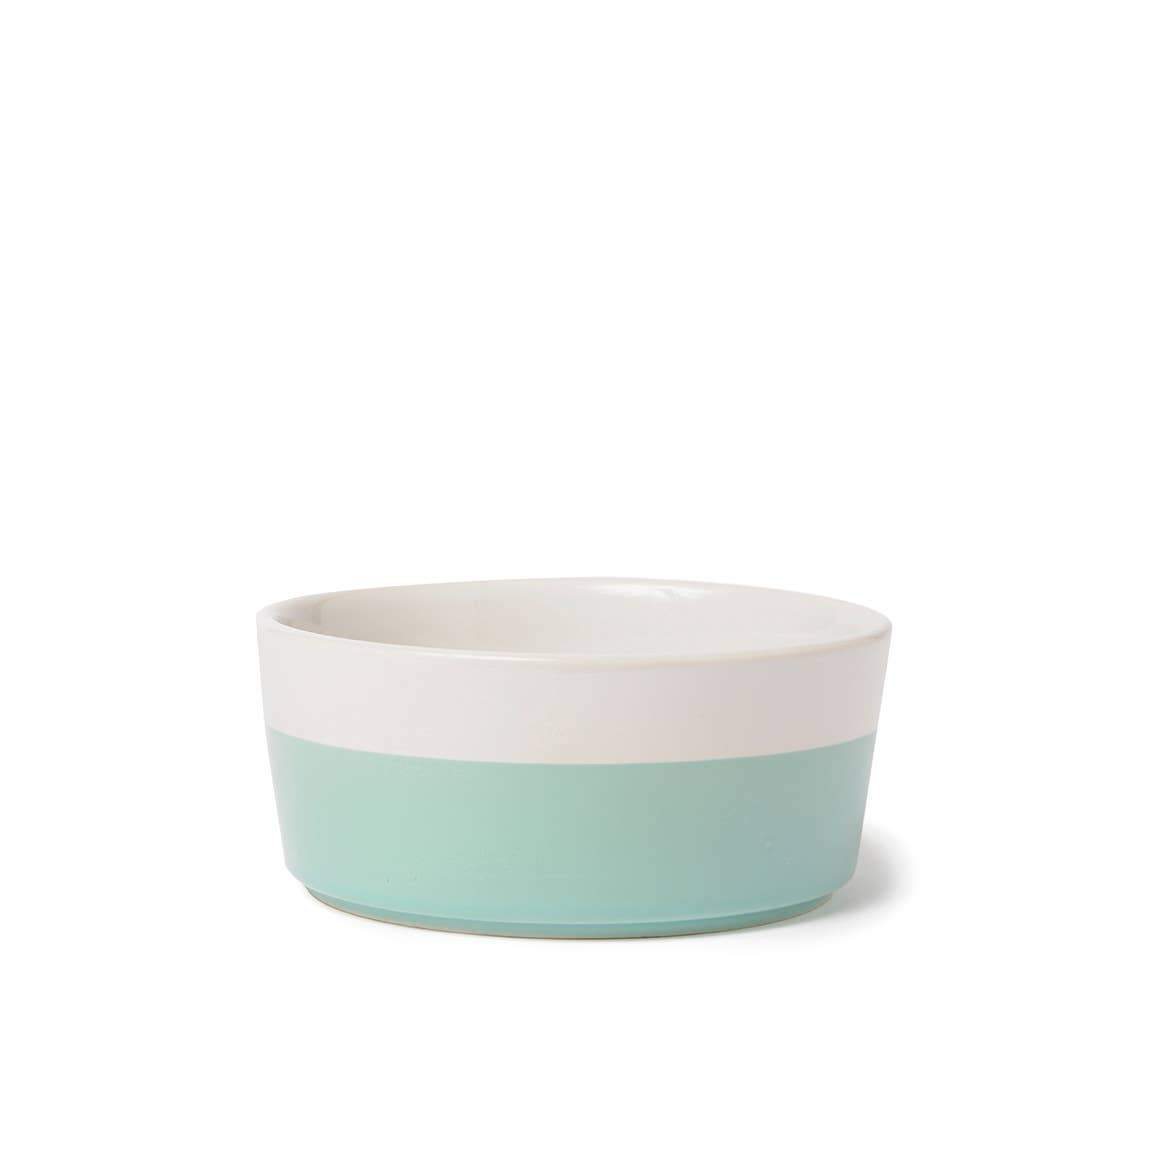 ceramic dog bowl